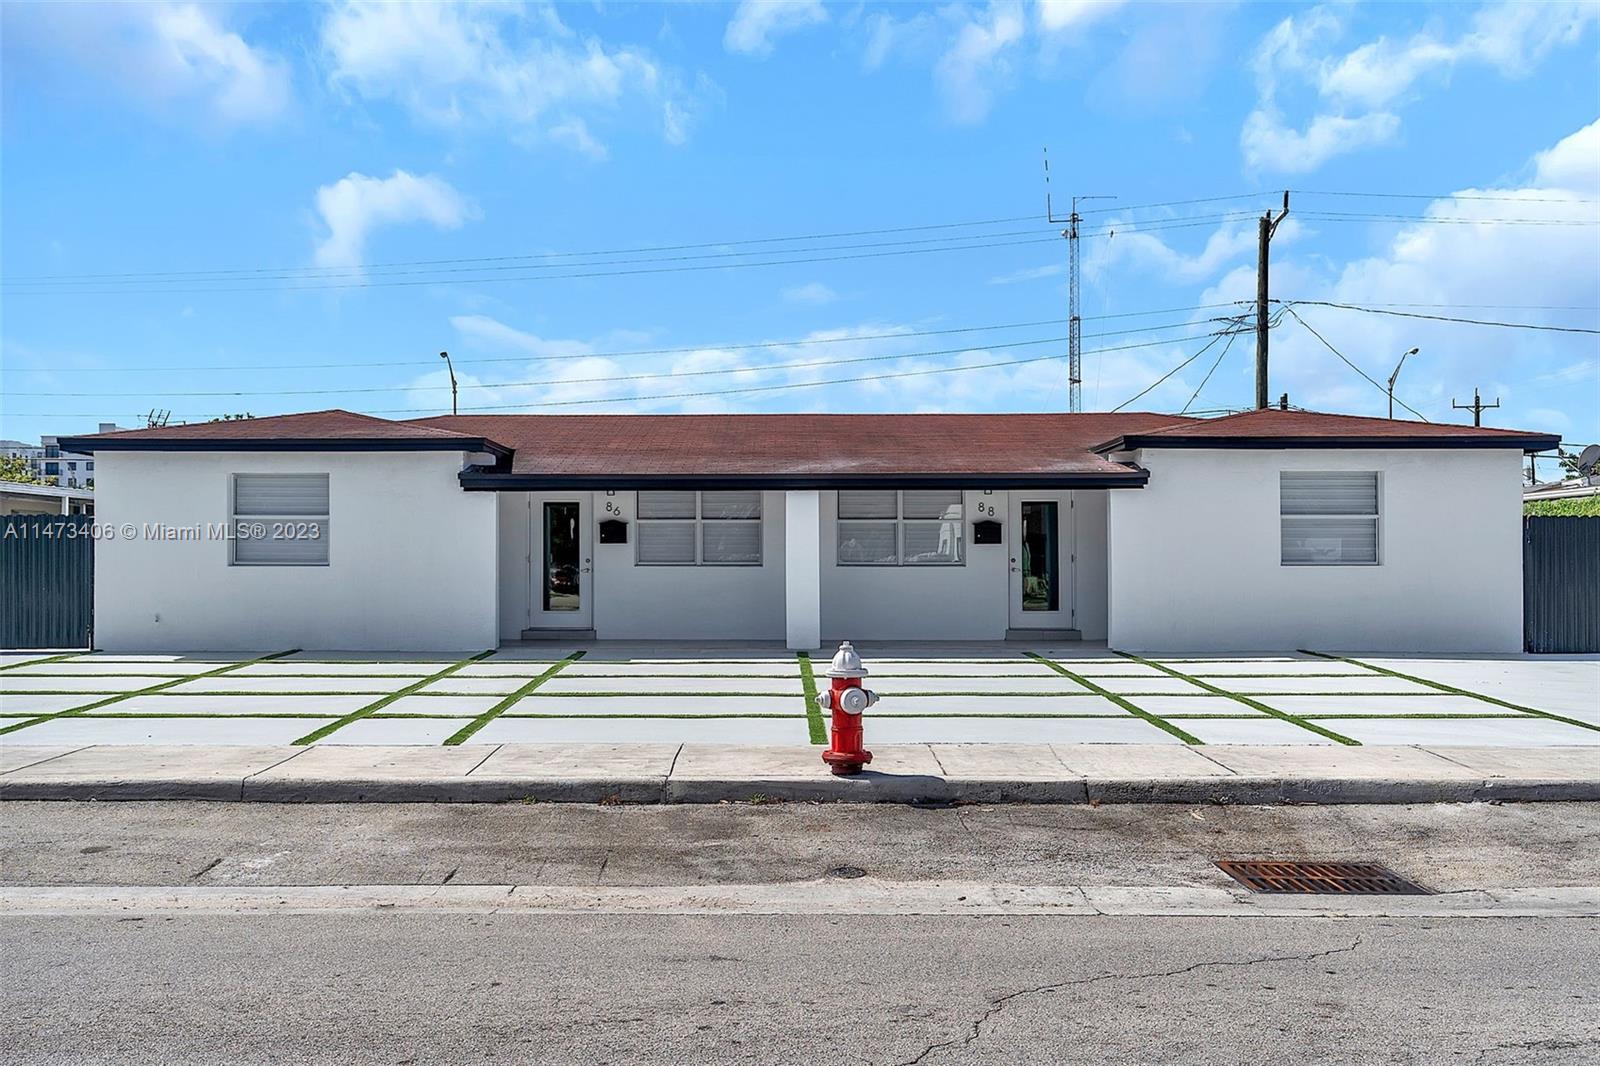 Rental Property at 86 Ne 6th Ave, Hialeah, Miami-Dade County, Florida -  - $799,000 MO.